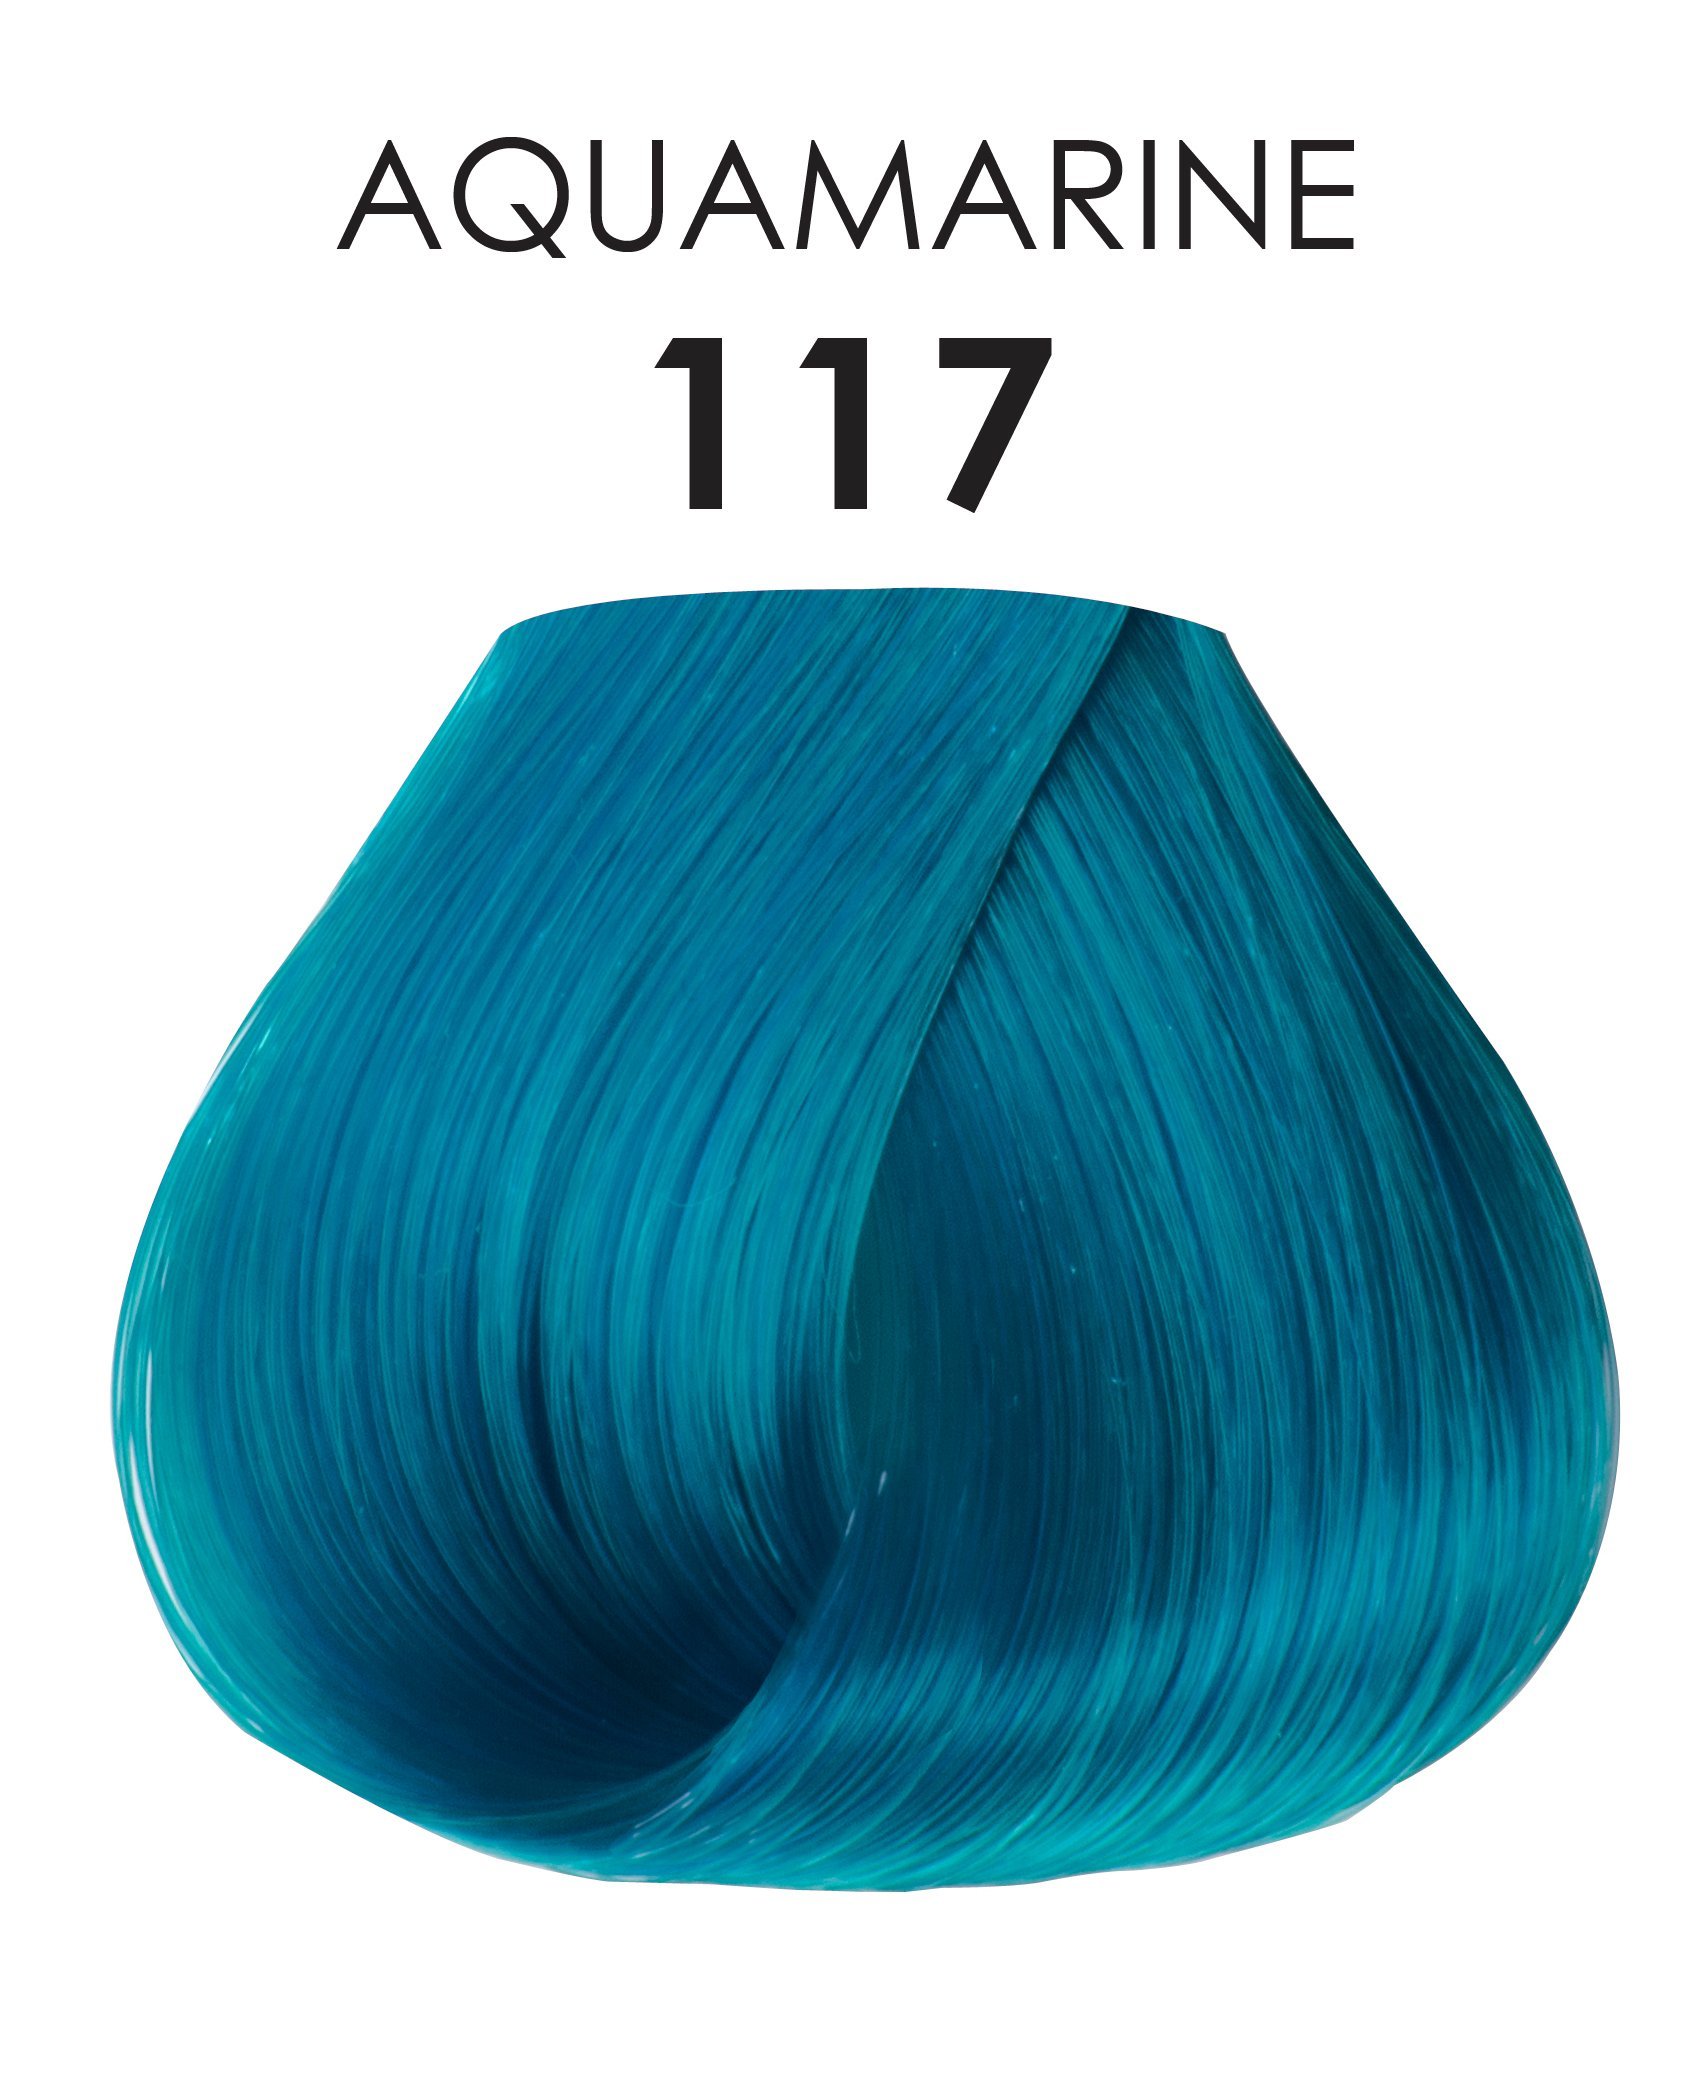 Adore Shining Semi-Permanent Hair Colour, 117 aquamarine, 4 Fl Oz